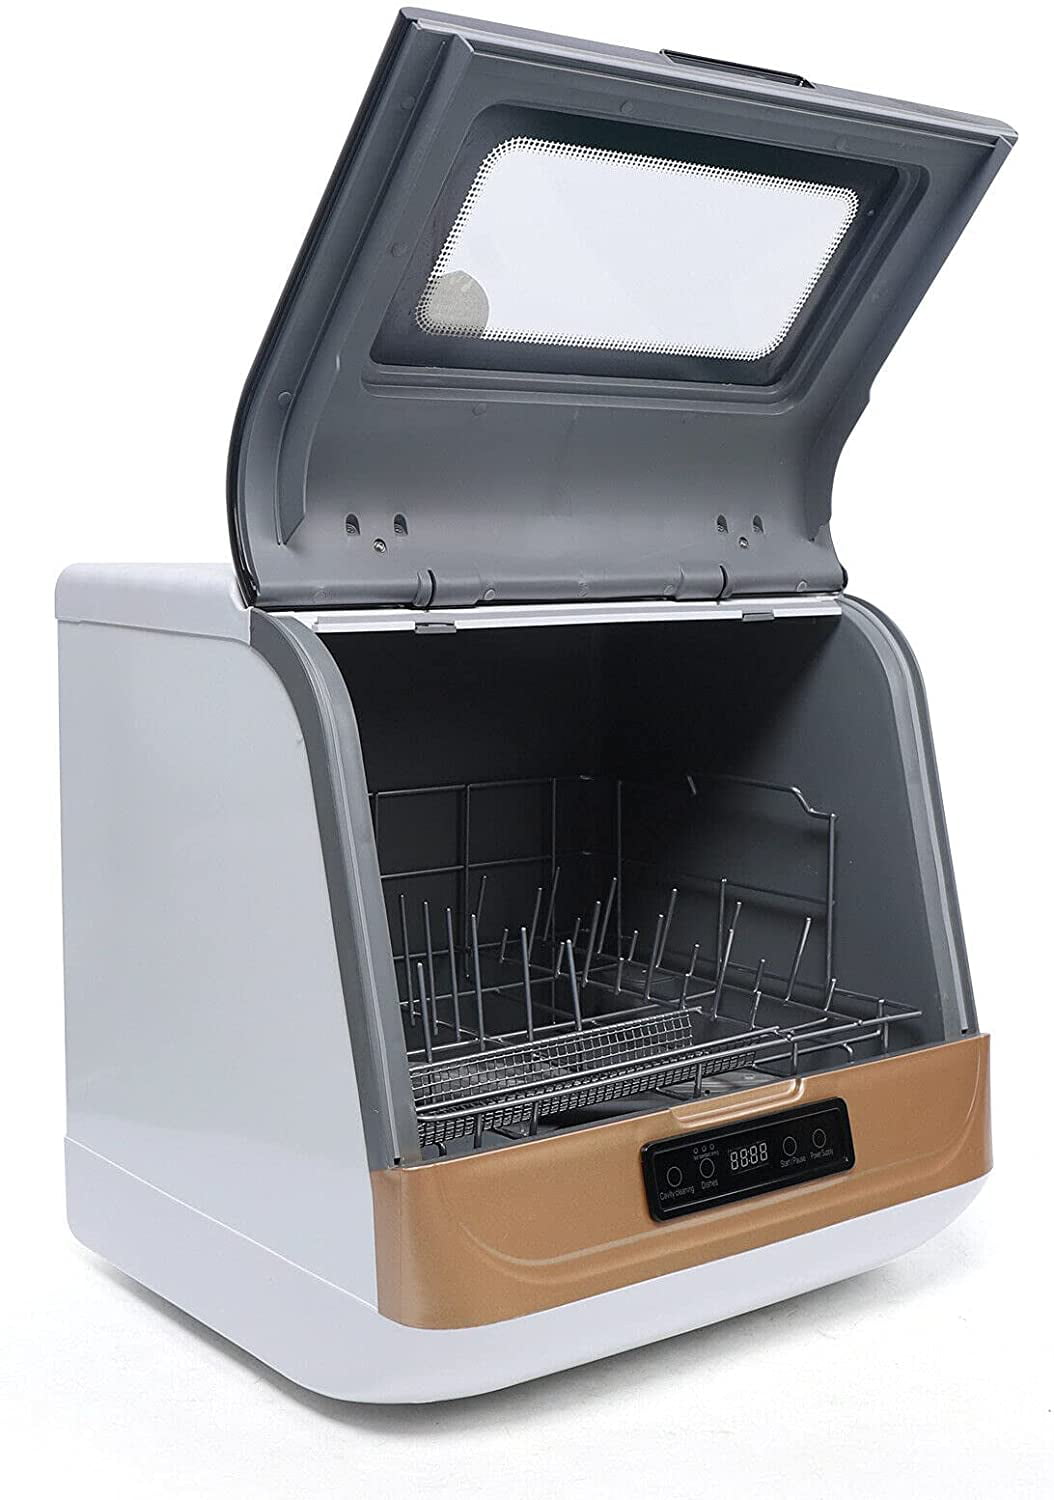 TFCFL Portable Countertop Dishwasher 4 Washing Programs 1200W Dish Washer Automatic - 3